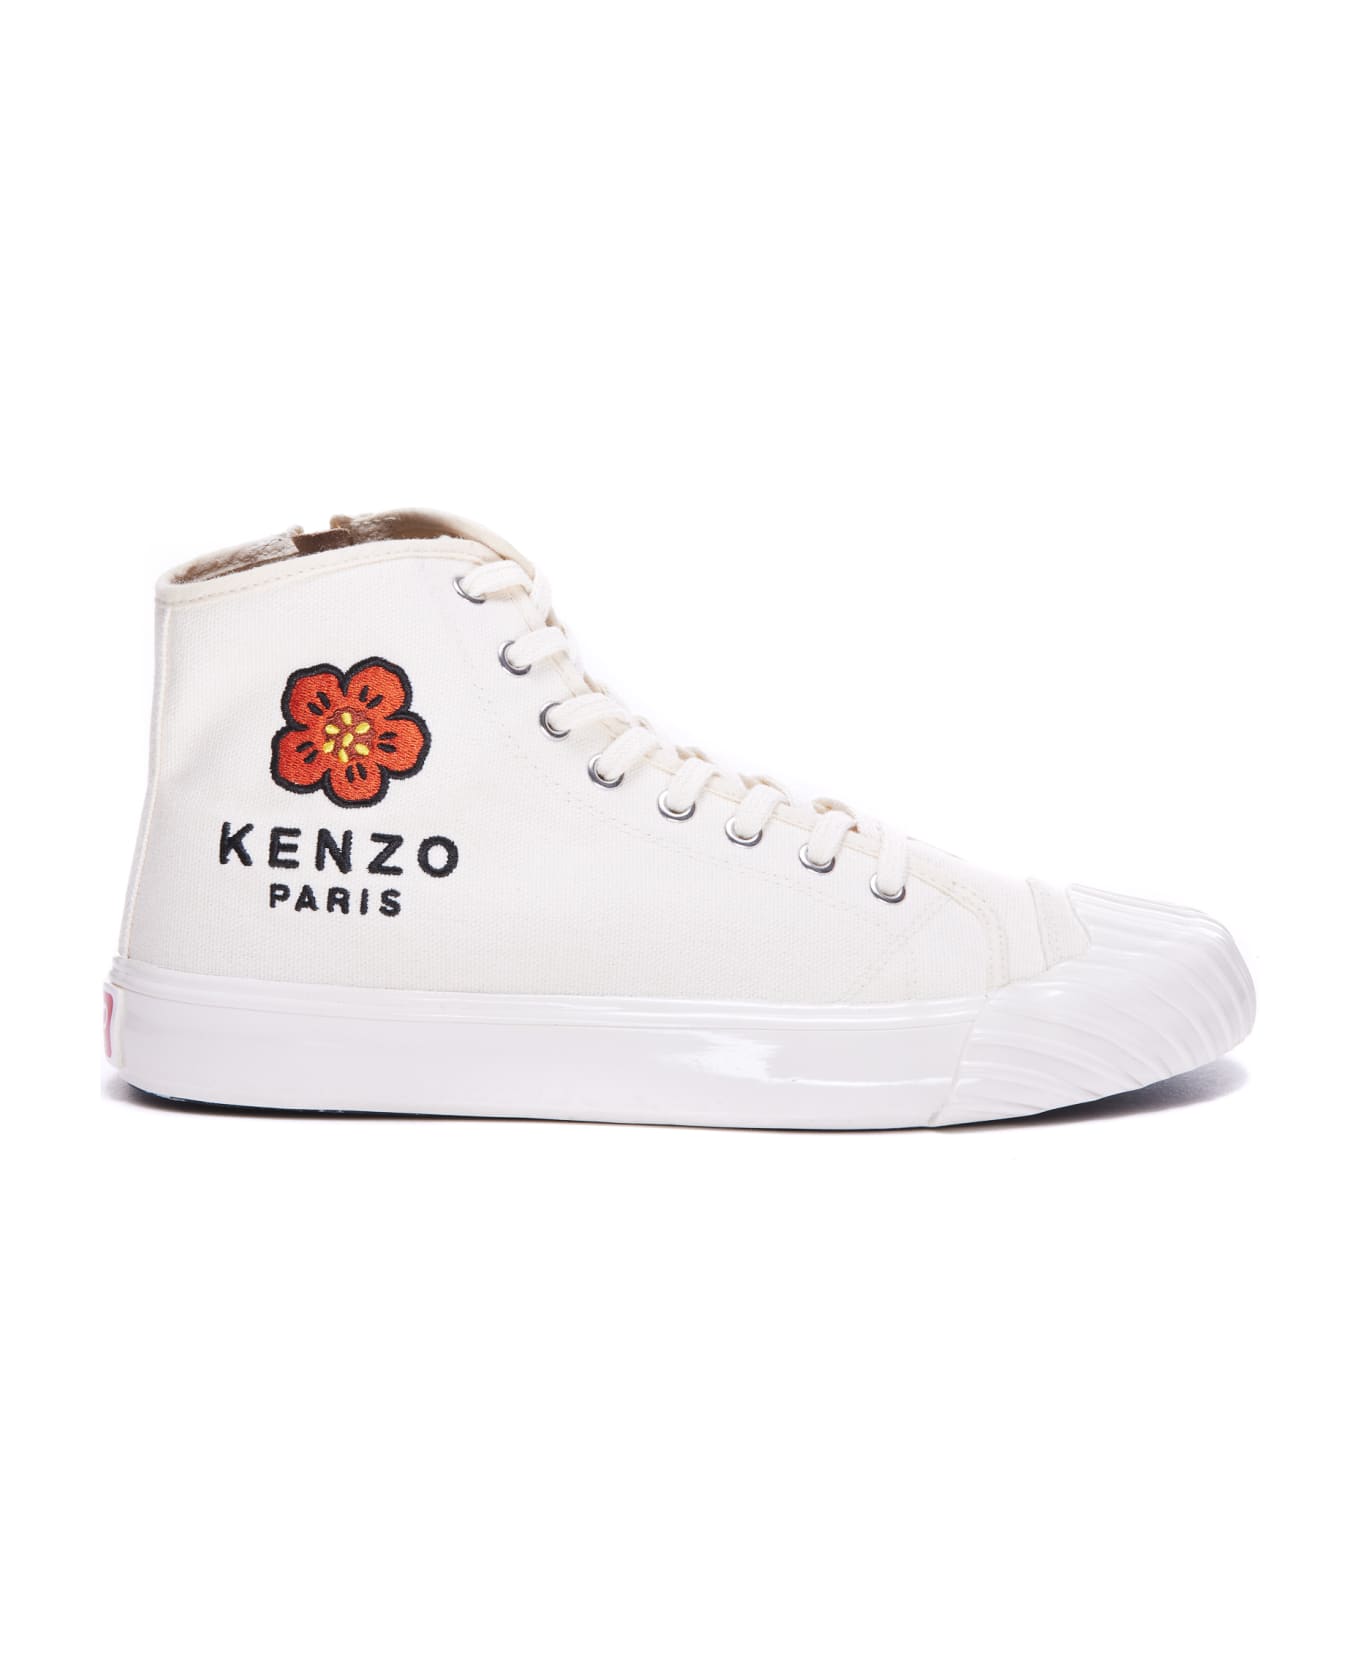 Kenzo School Sneakers - Creme